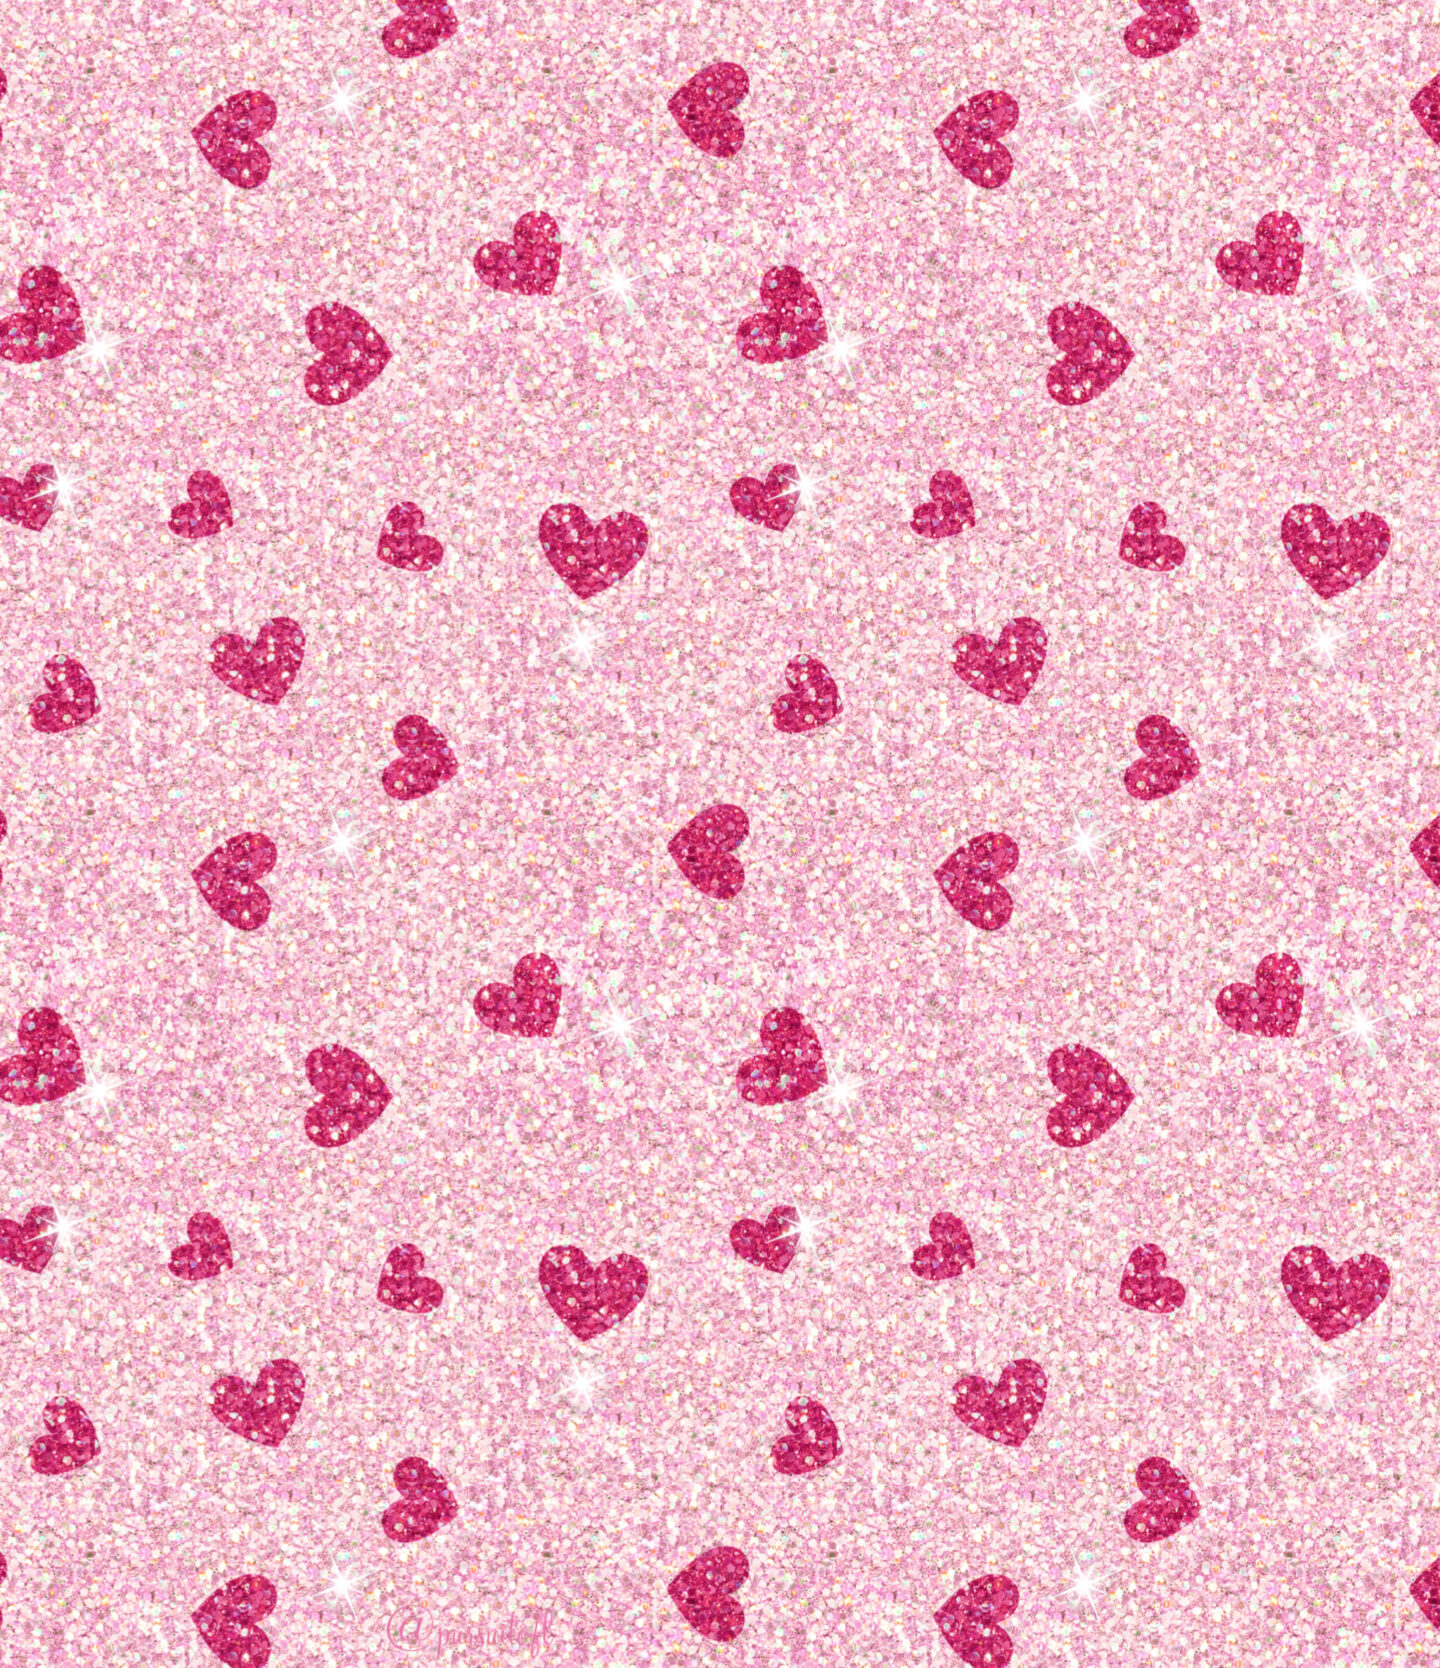 Light Pink Glitter Tablet Wallpaper with Dark Pink Glitter Hearts; Valentine's Day Wallpaper